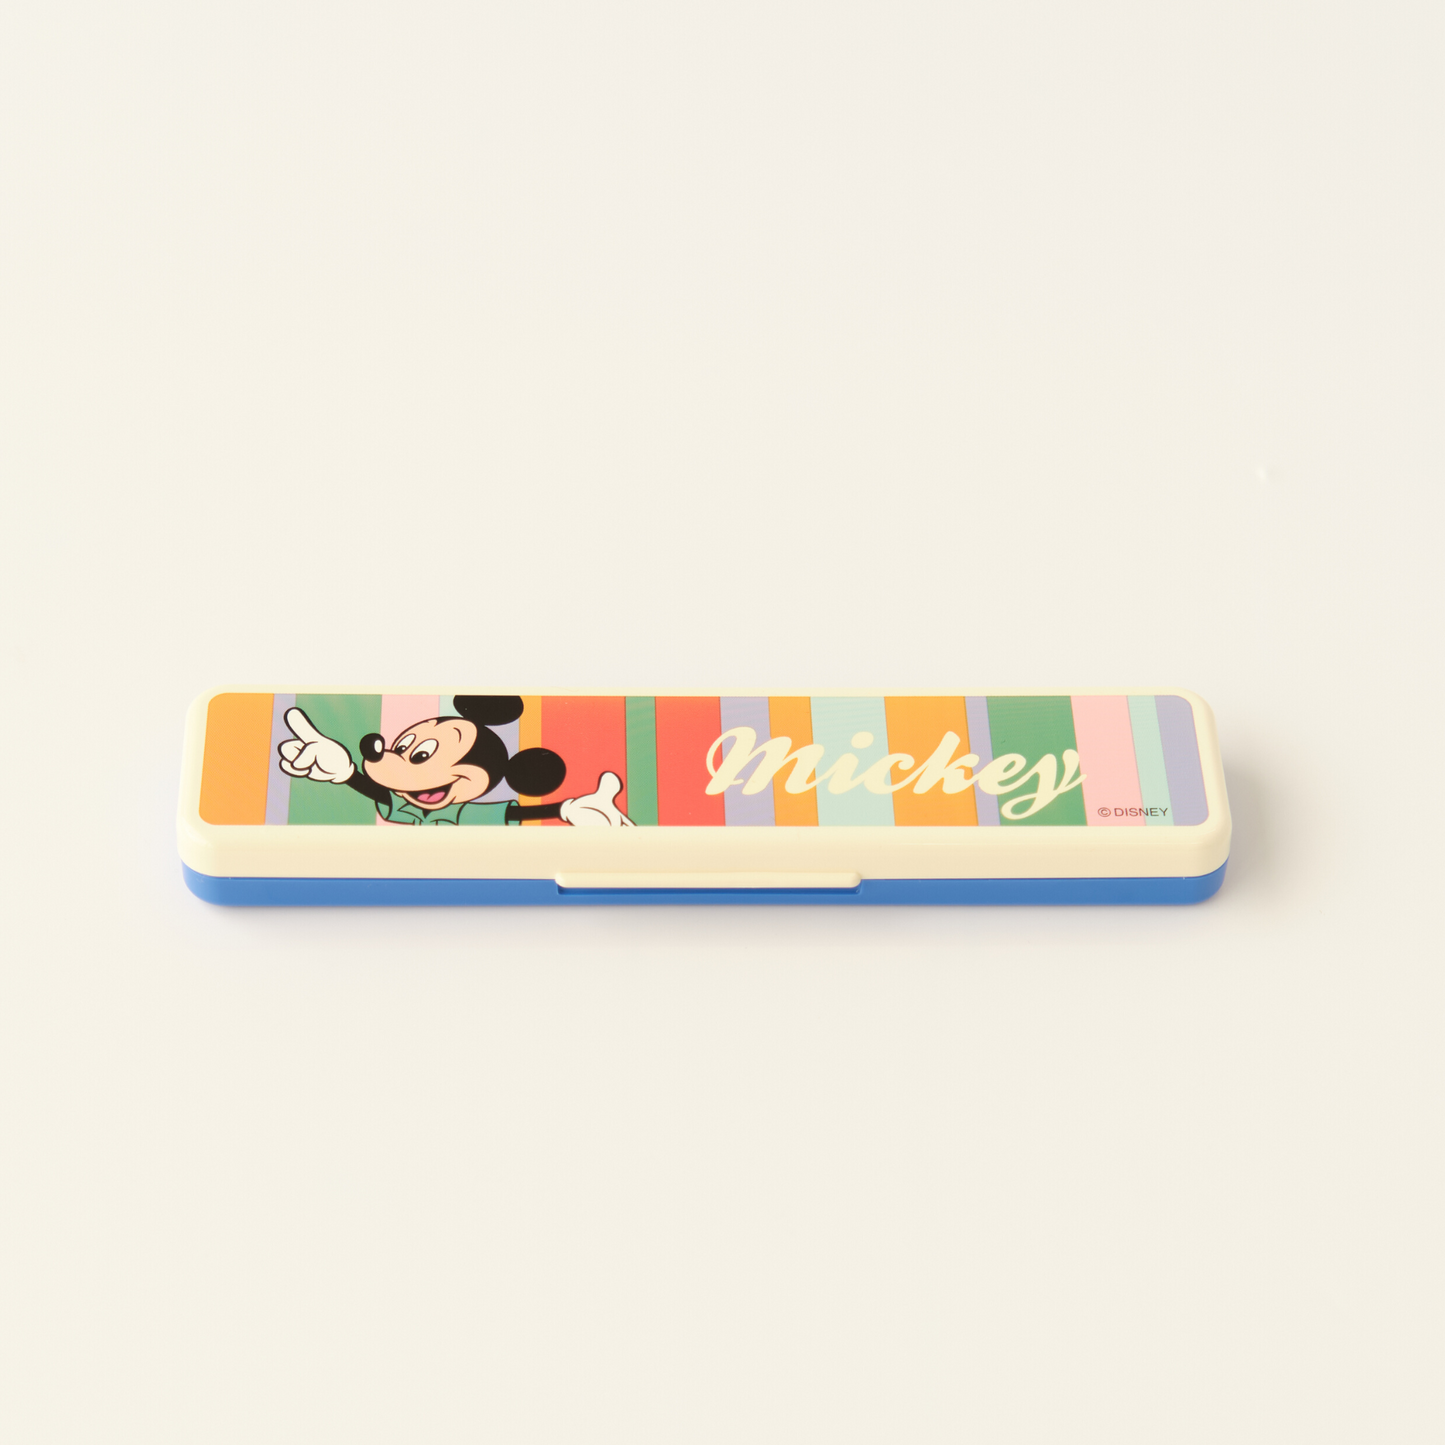 Retro Mickey Chopsticks & Spoon Set